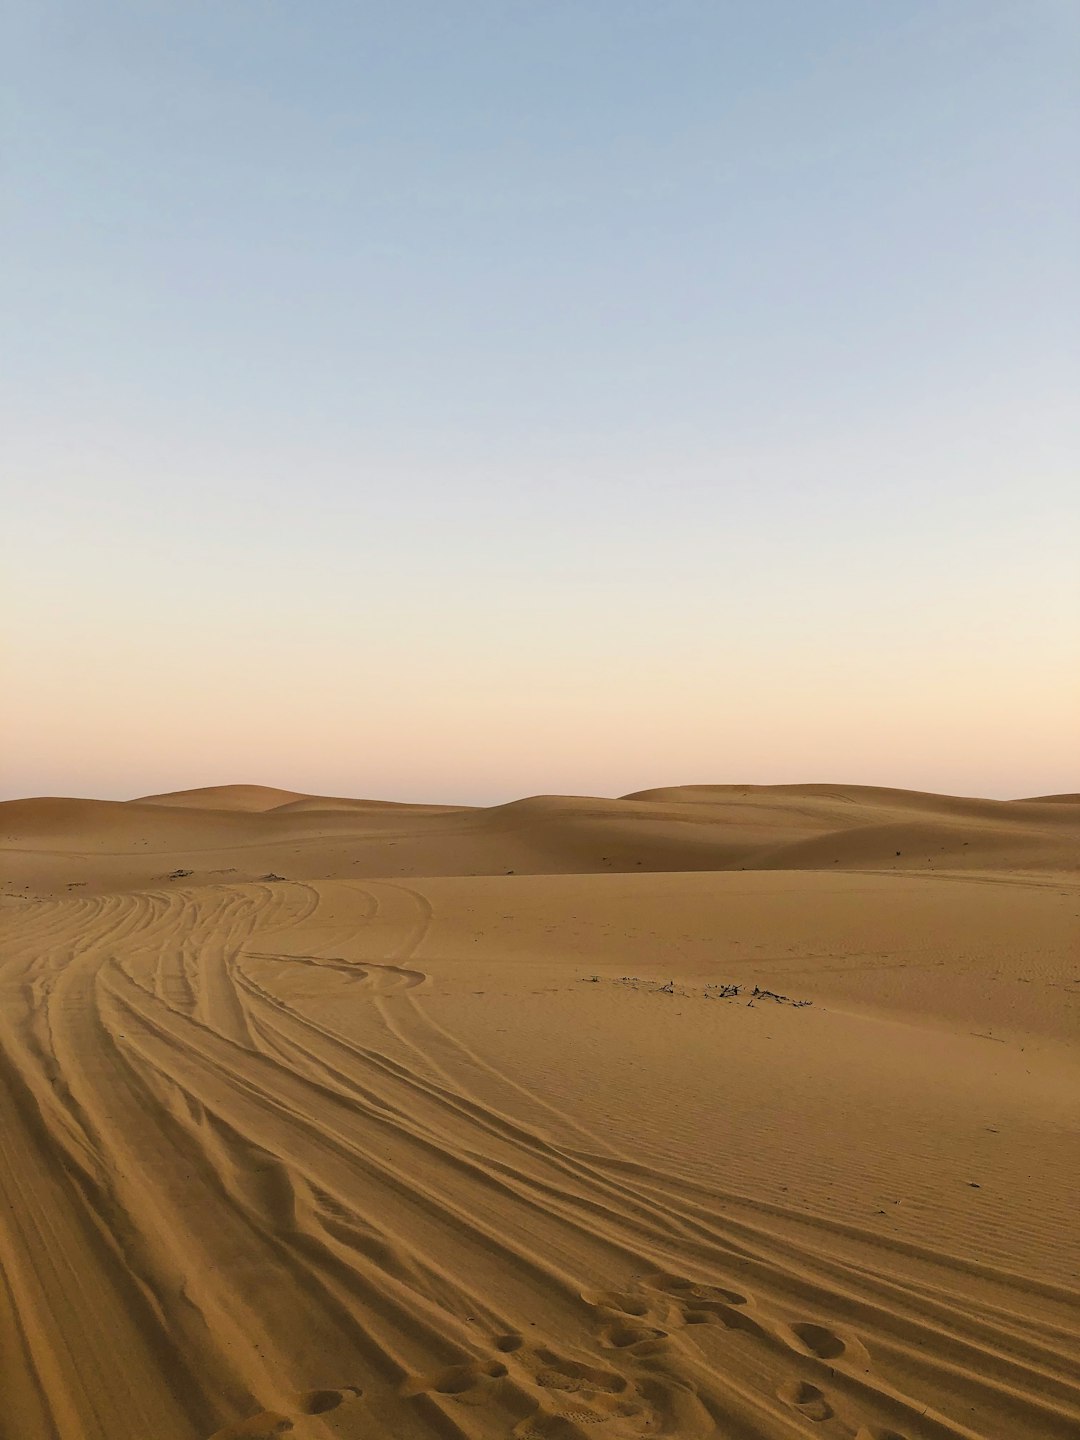 Desert photo spot Sheikh Zayed Desert Learning Centre - Al Ain - Abu Dhabi - United Arab Emirates Hatta